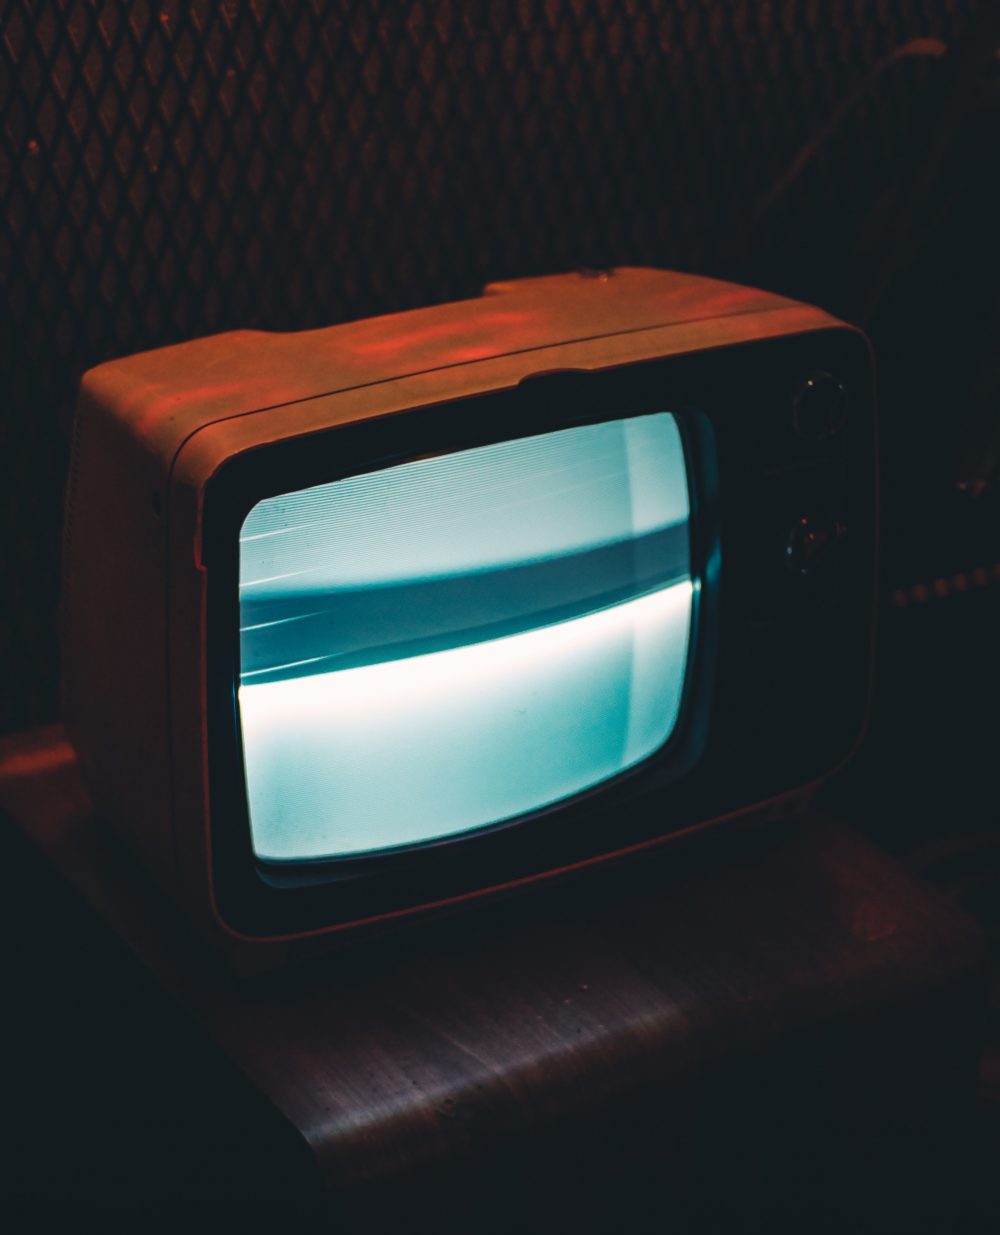 A Vintage Television